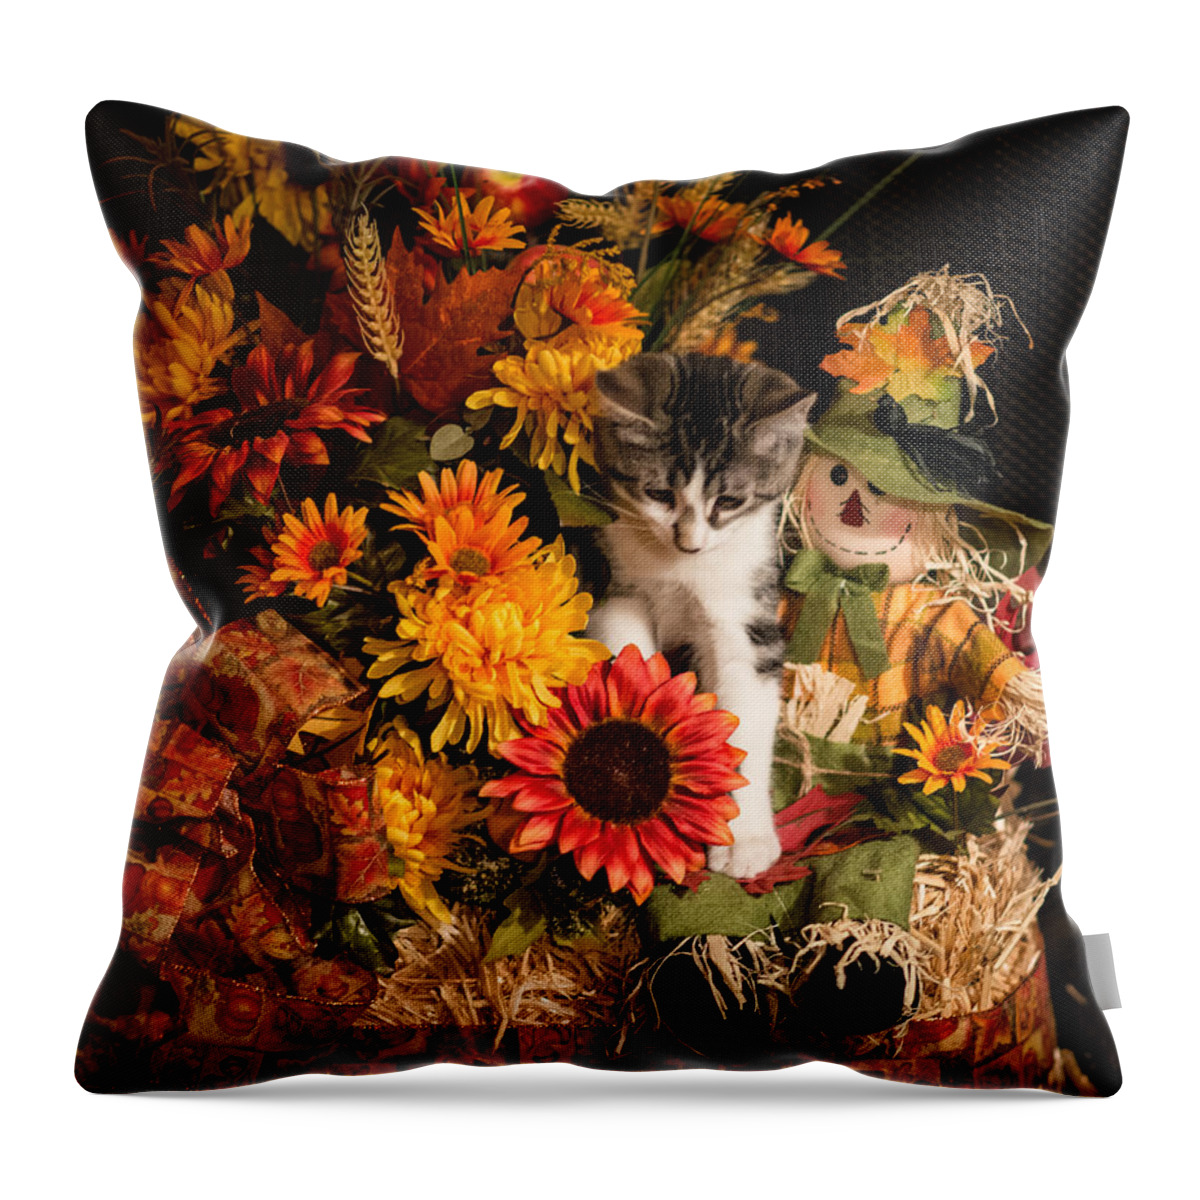 Kitten Throw Pillow featuring the photograph The Centerpiece by Pamela Taylor